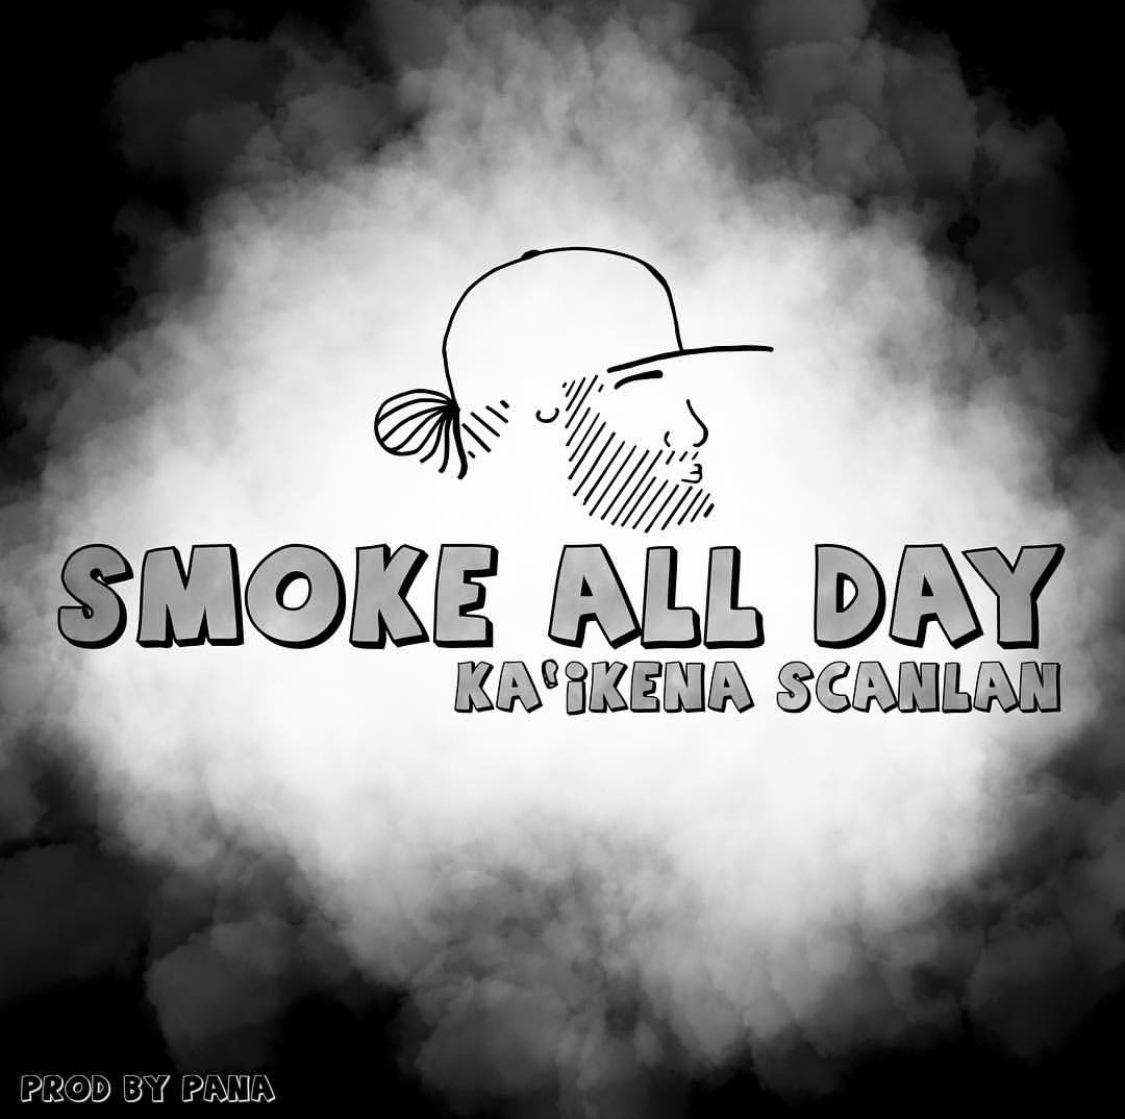 KA'IKENA SCANLAN - "SMOKE ALL DAY"